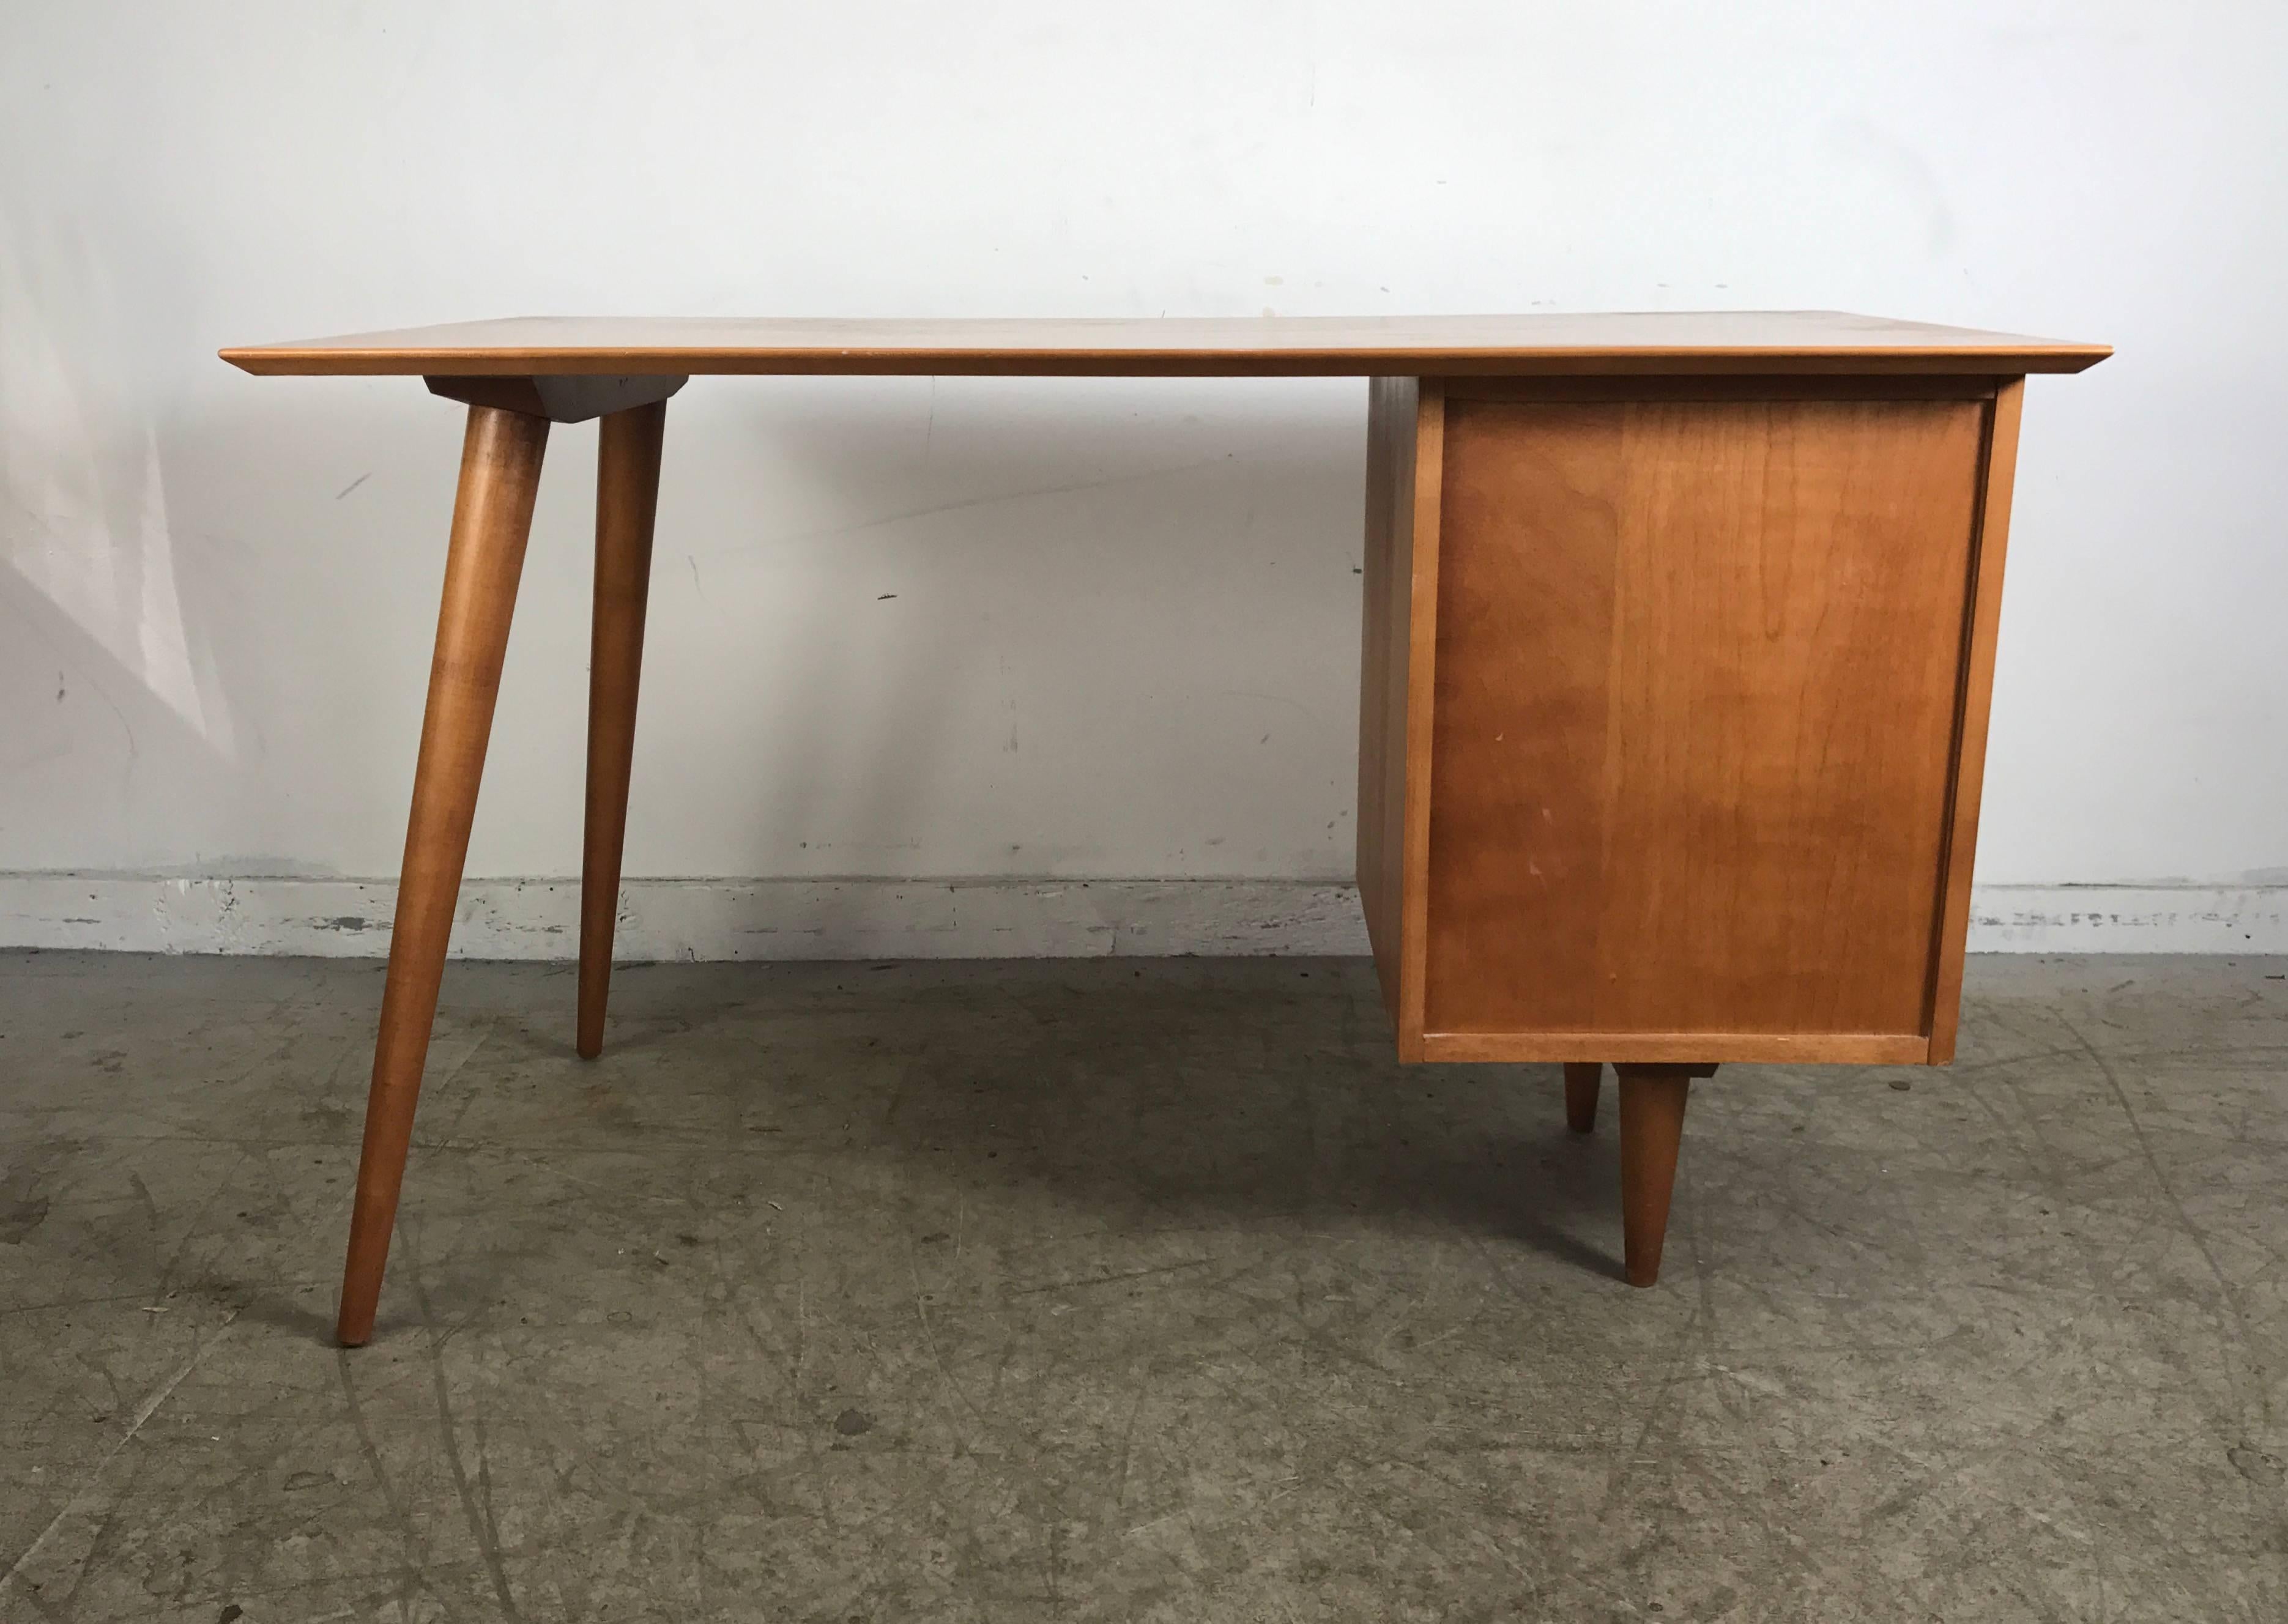 20th Century Classic Modernist Desk by Paul McCobb